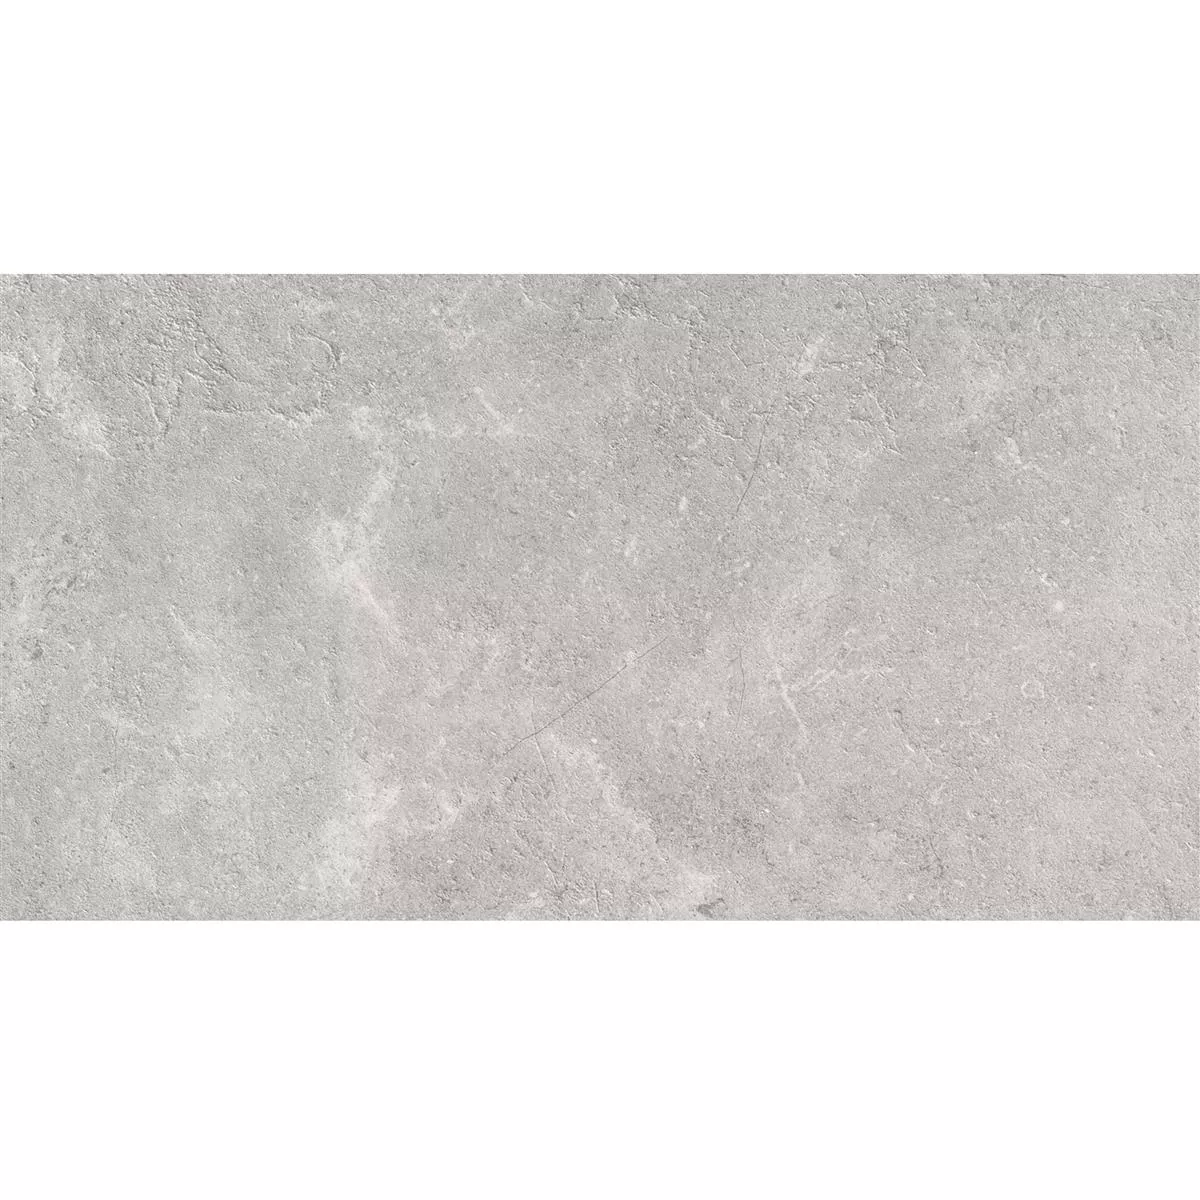 Gresie Bangui Aspect De Piatră Argint 30x60cm